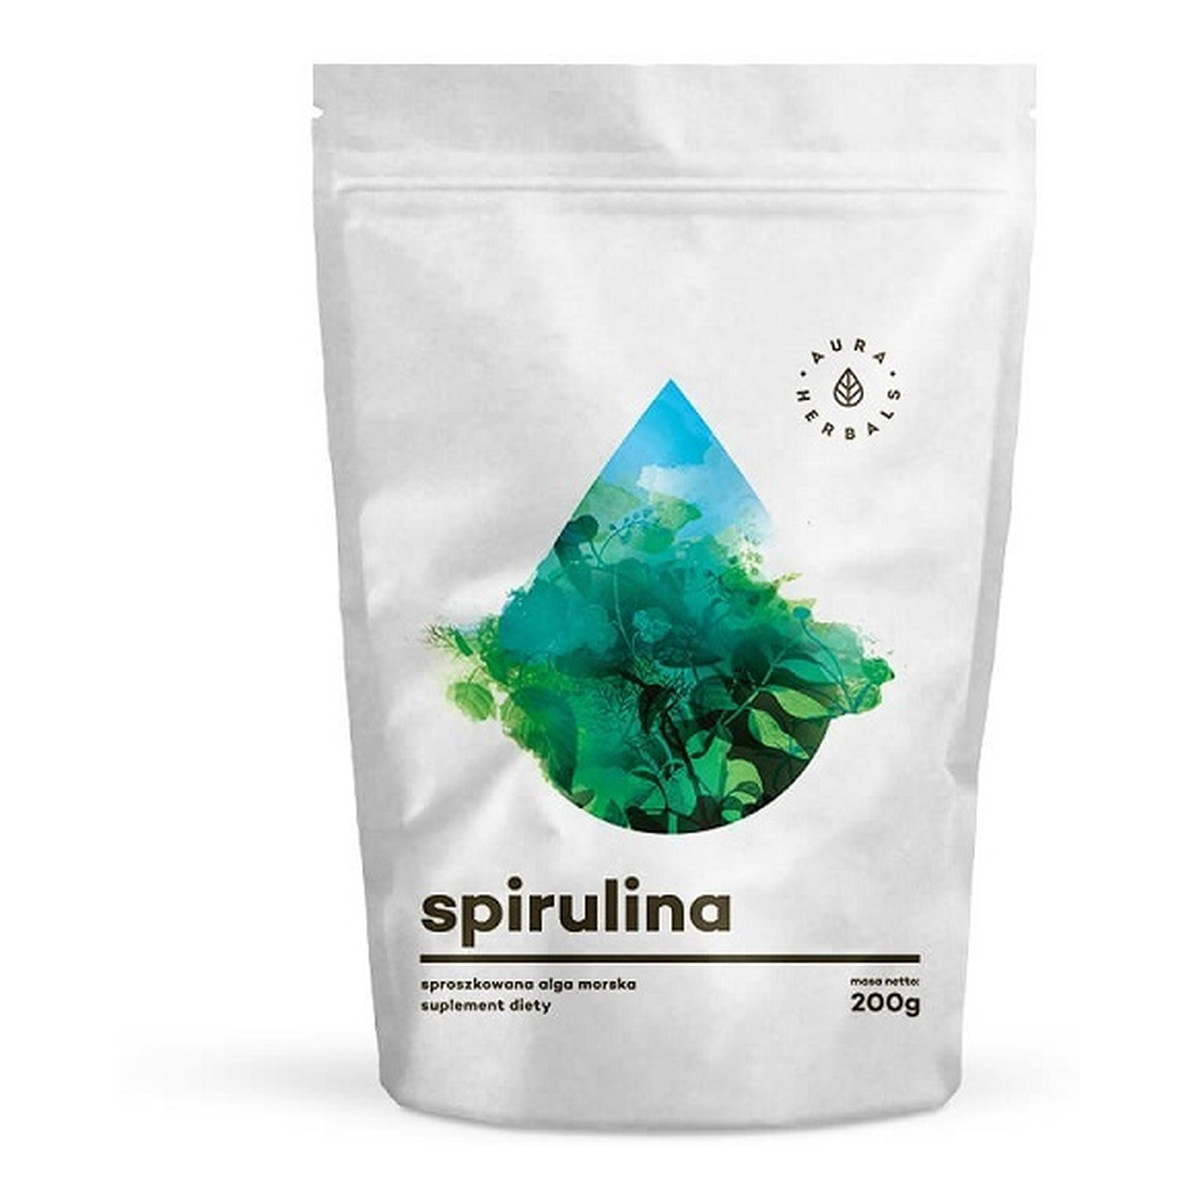 Aura Herbals Spirulina sproszkowana alga morska suplement diety 200g